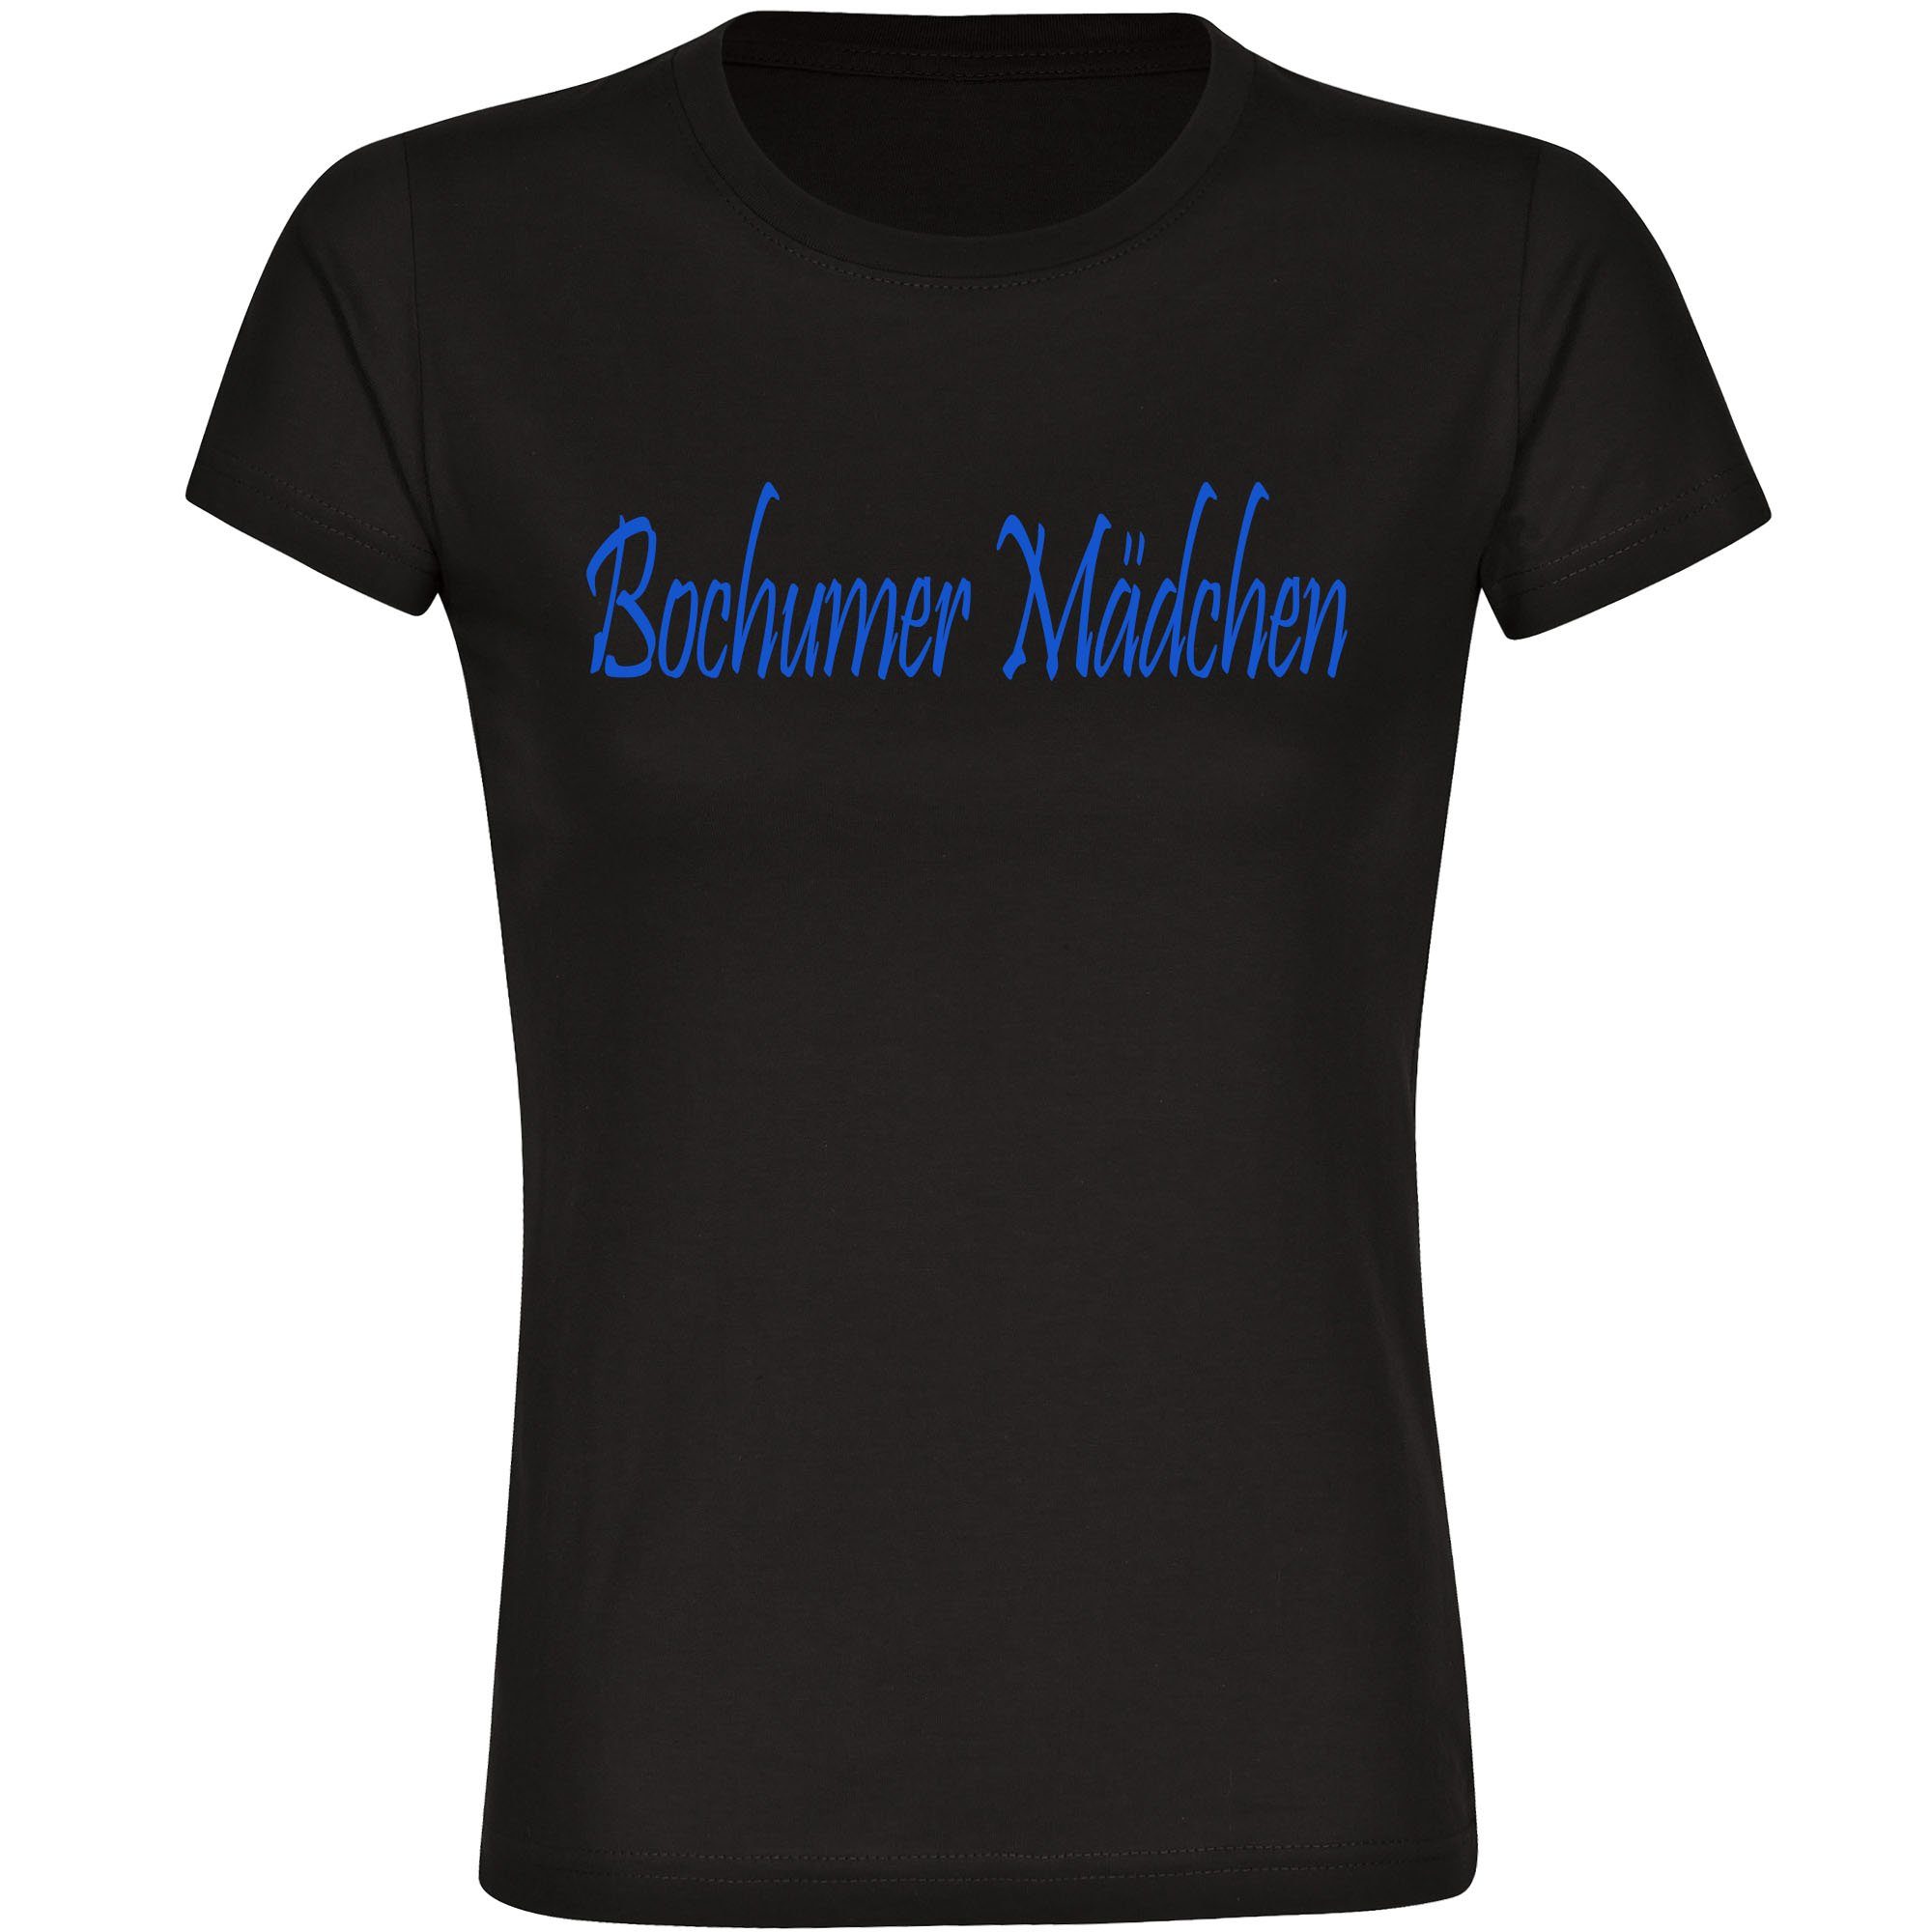 multifanshop T-Shirt Damen Bochum - Bochumer Mädchen - Frauen